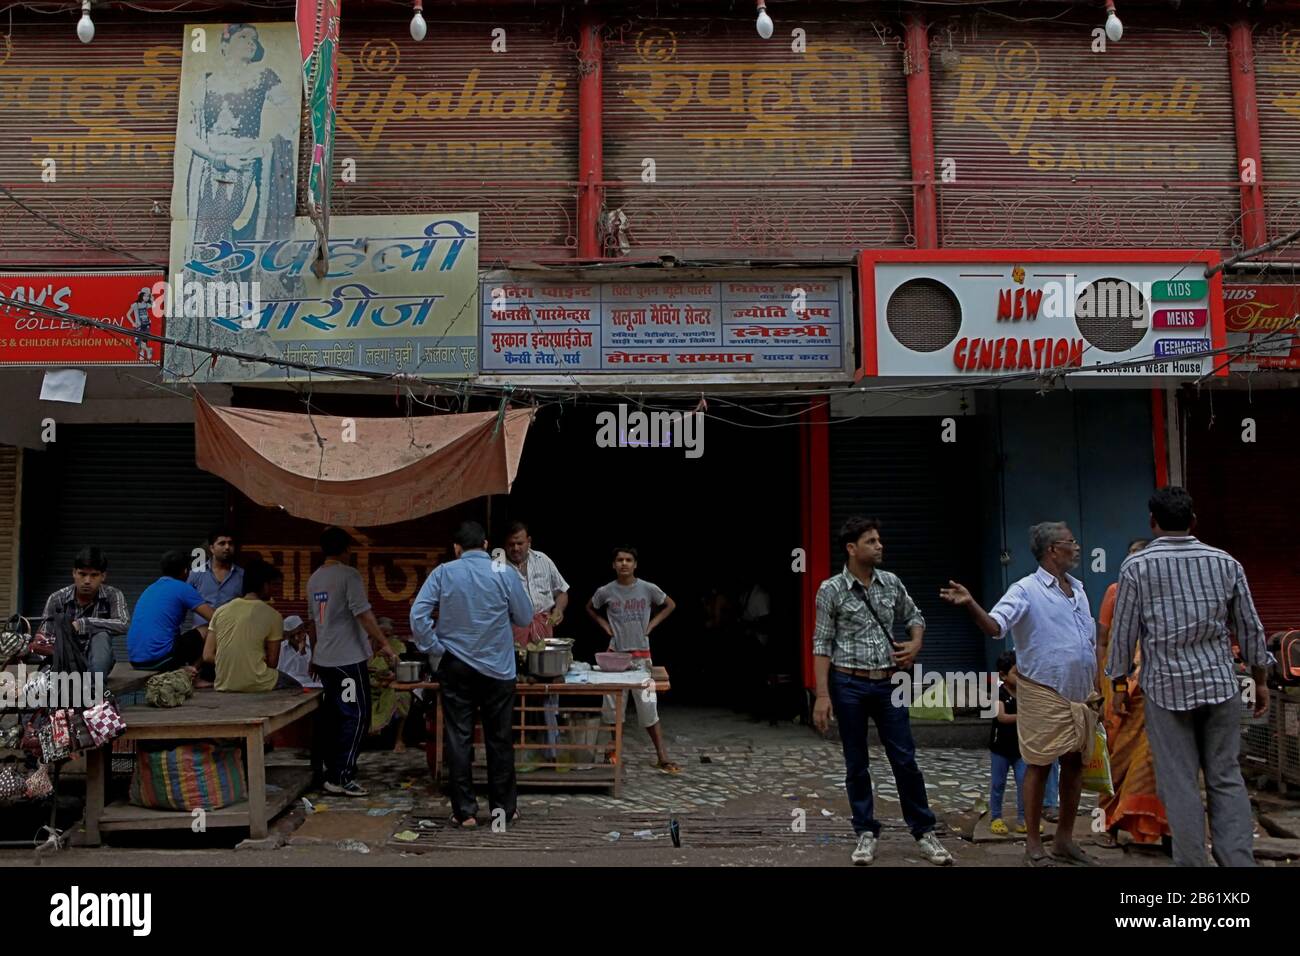 People gathers and chats in front of a street food vendor in Varanasi shopping area. Varanasi City, Uttar Pradesh, India. Stock Photo